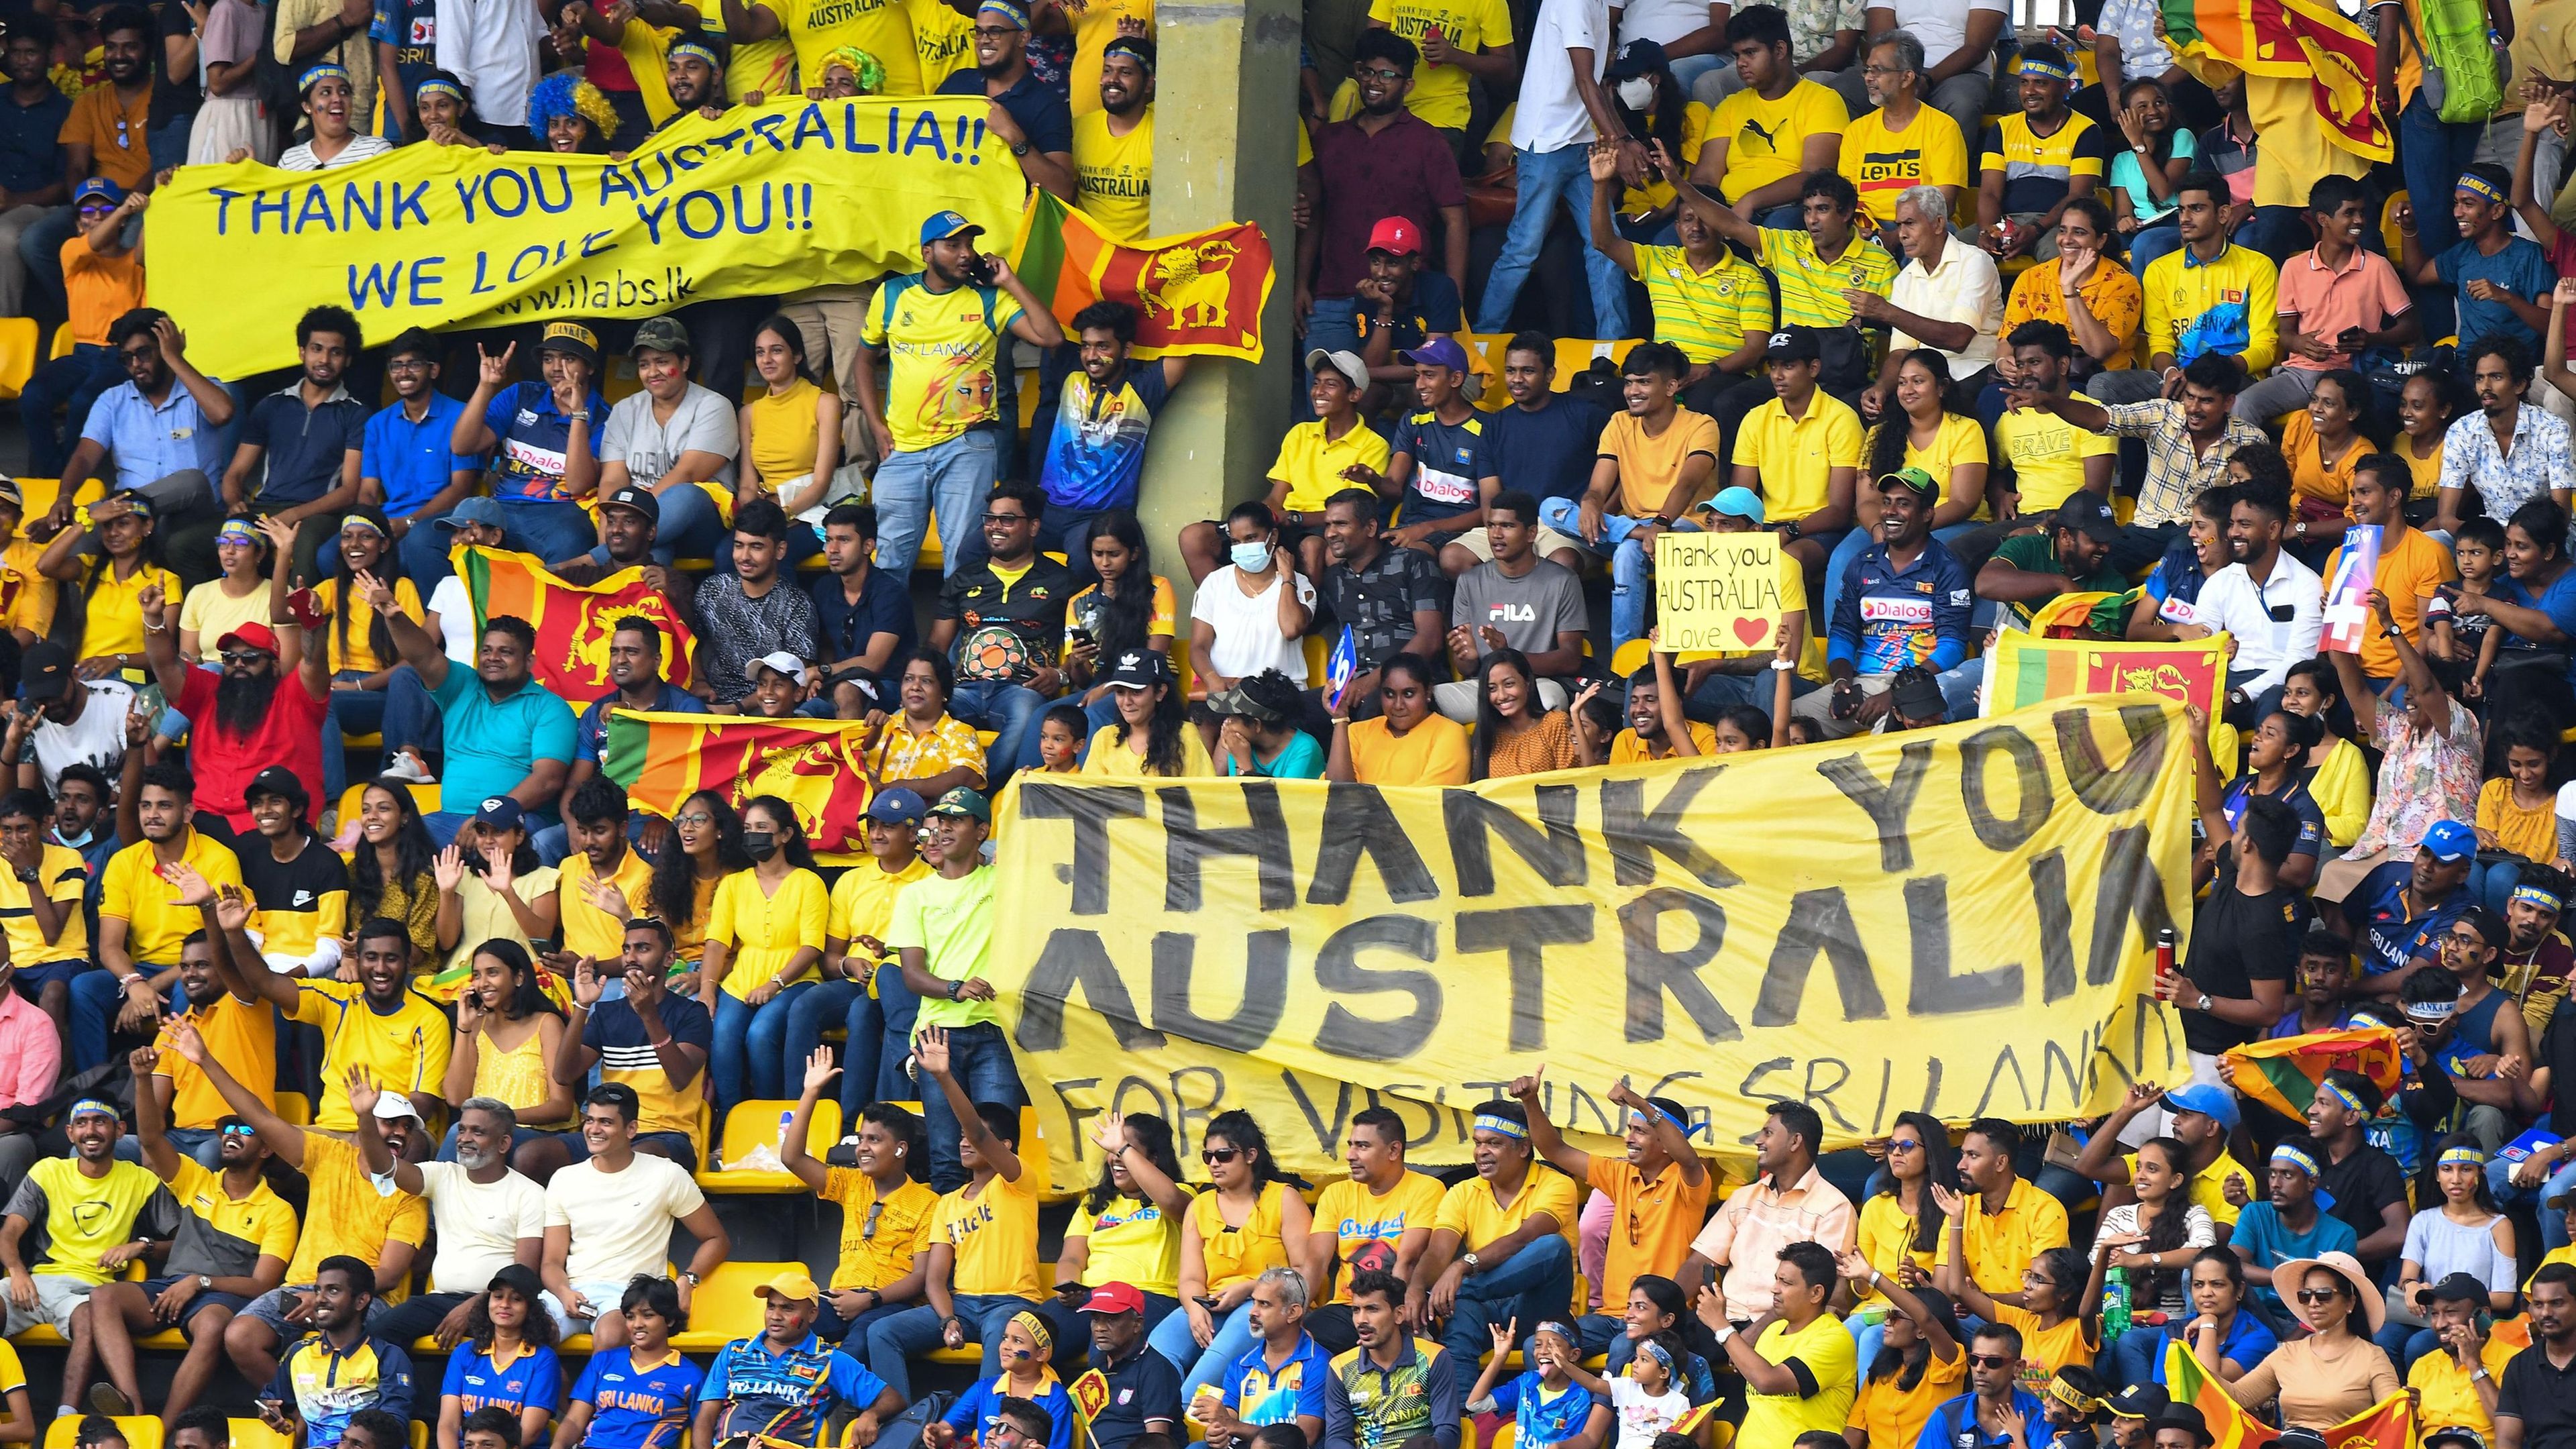 Consolation win for Australia in fifth ODI against Sri Lanka as home fans create 'pretty special moment'